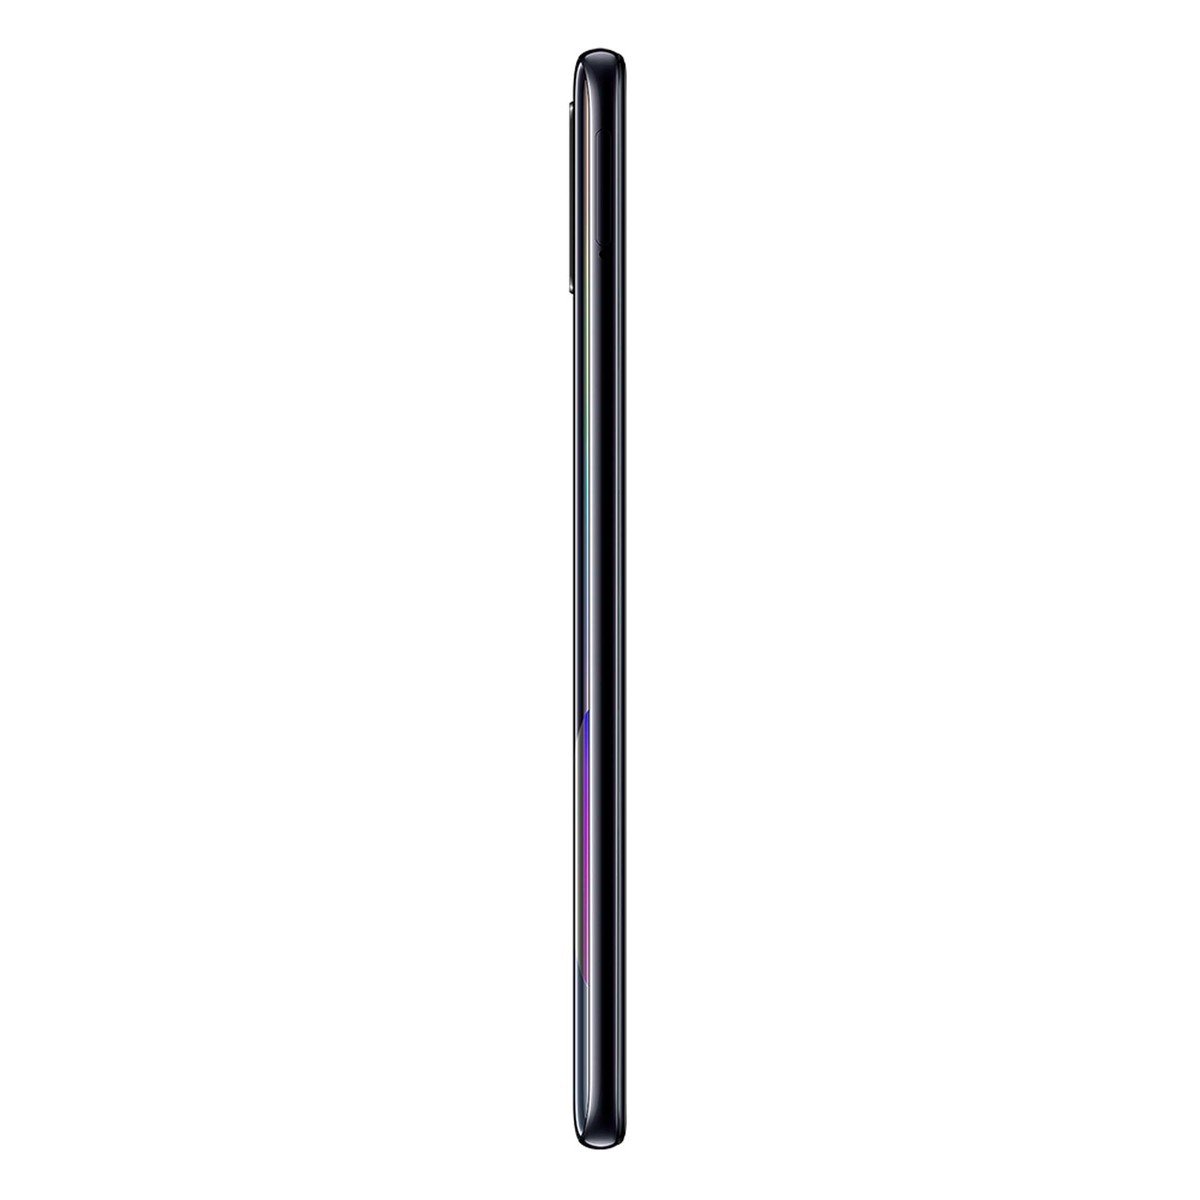 Samsung Galaxy A30s SMA307 128GB Black